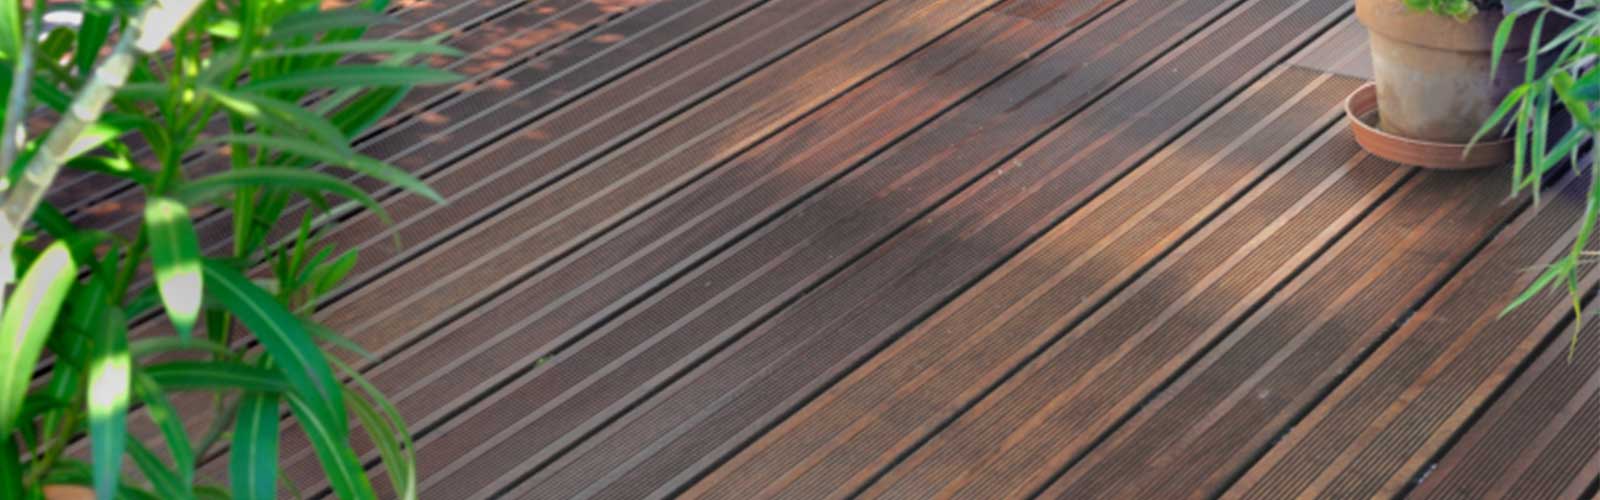 Wooden Terrace Deck